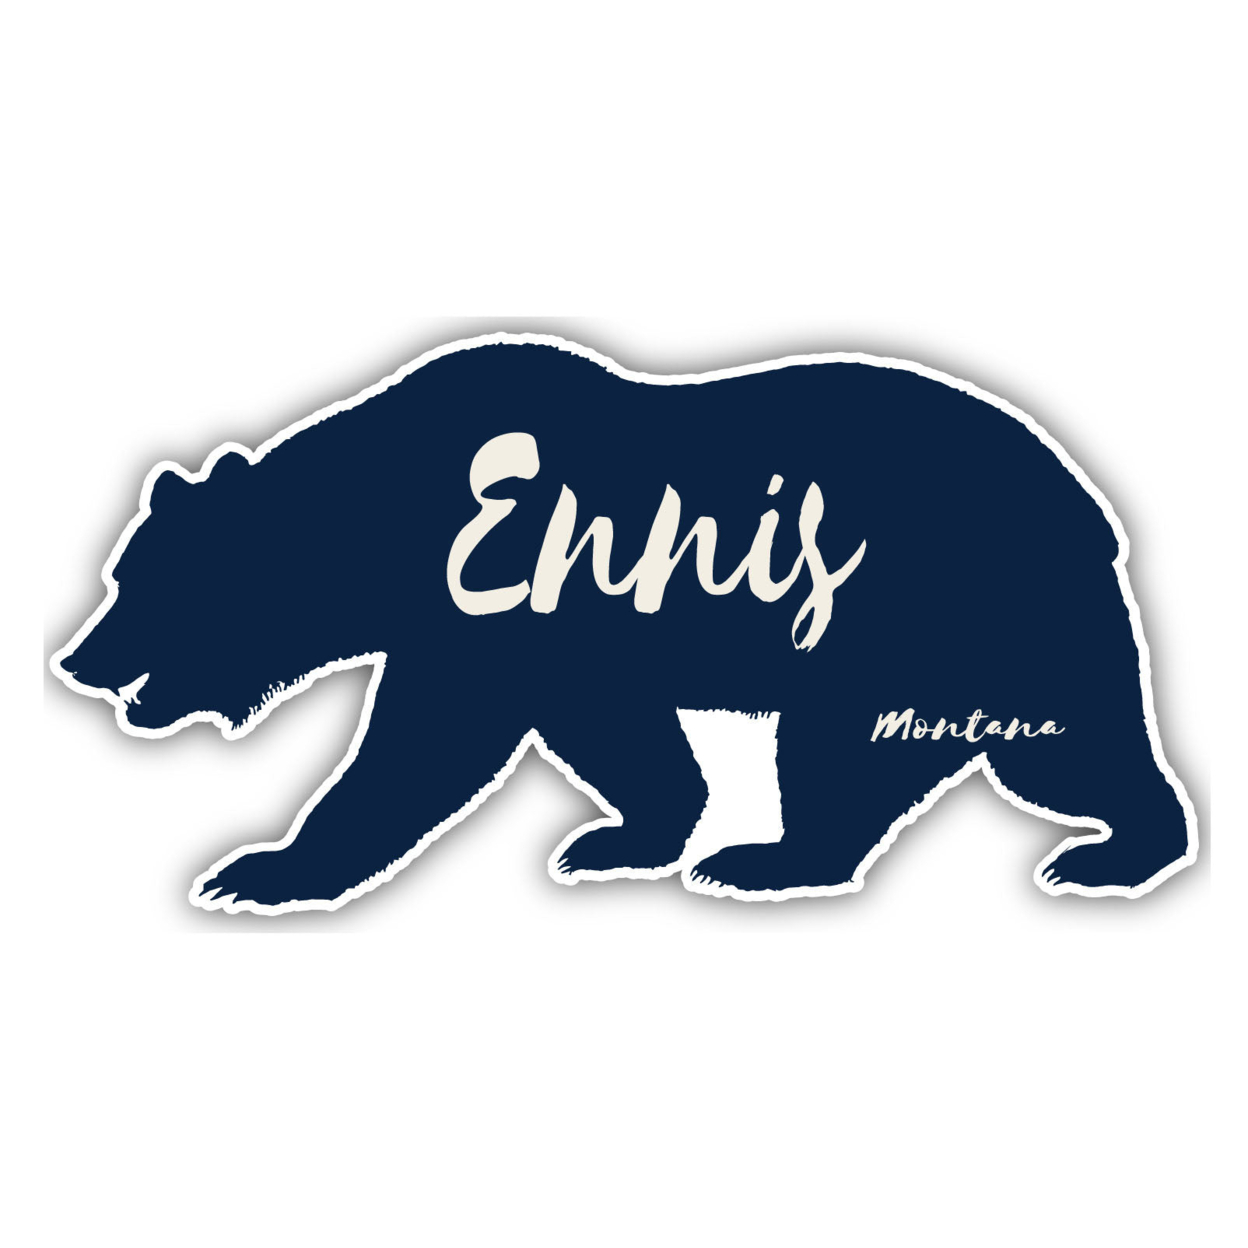 Ennis Montana Souvenir Decorative Stickers (Choose Theme And Size) - Single Unit, 8-Inch, Great Outdoors